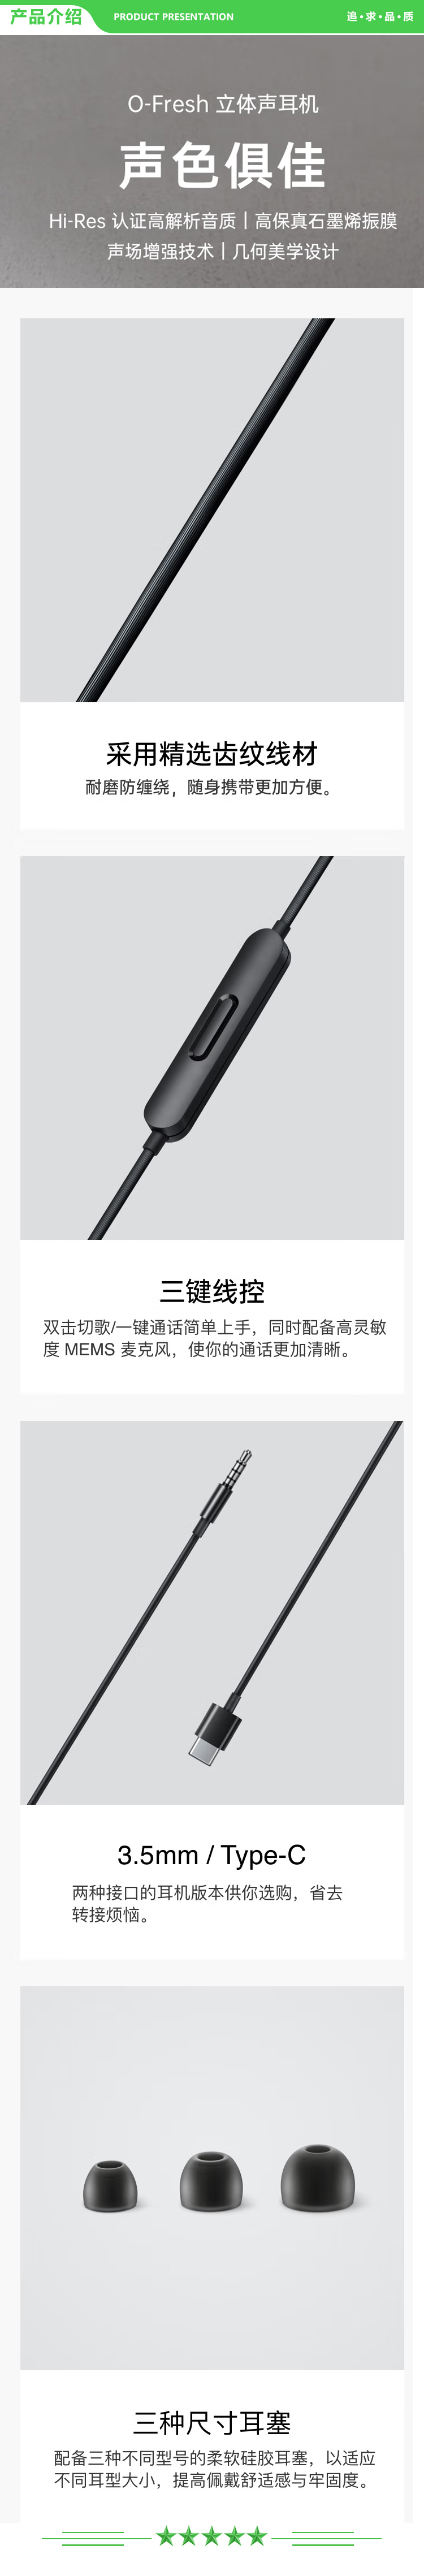 OPPO MH151 黑 oppo有线耳机 通用华为小米手机 3.5mm美标圆口 三键线控 适用于r17 r15x ace k5 O-fresh耳机  .jpg